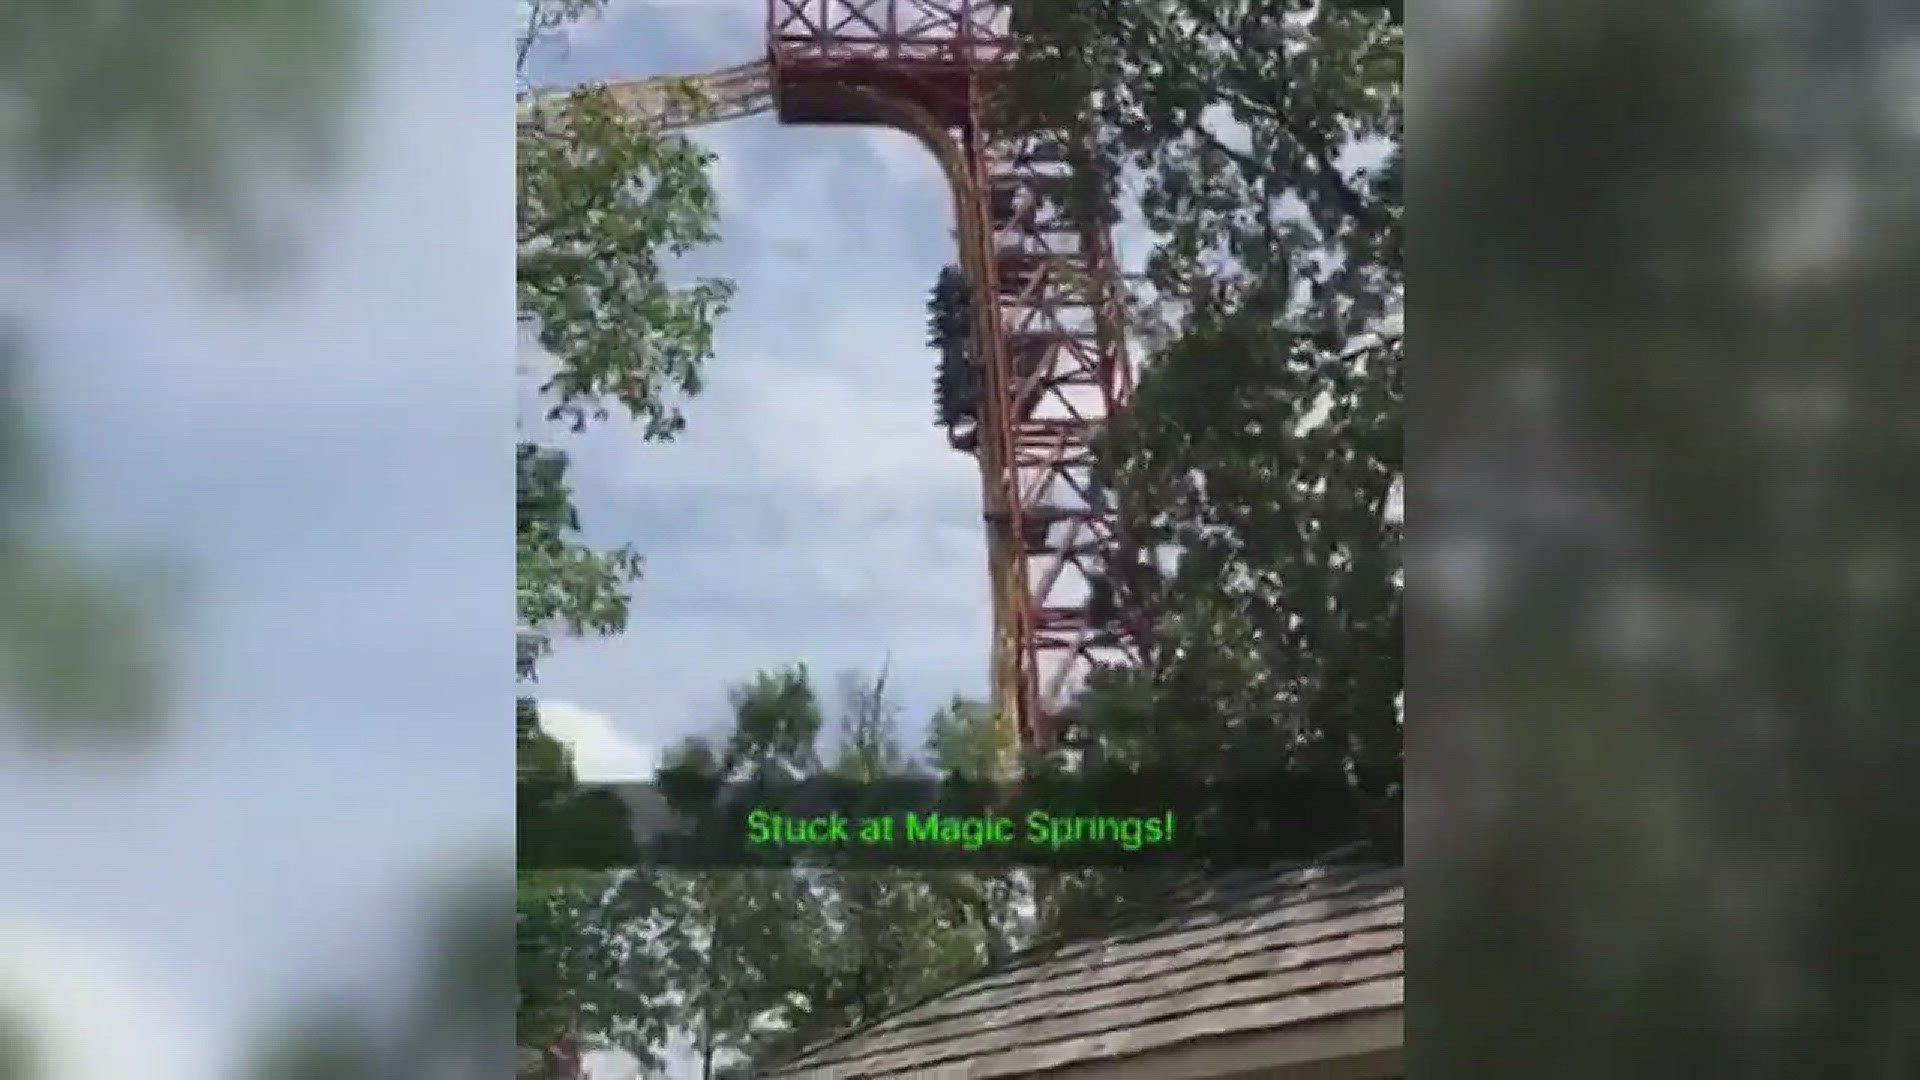 Passengers stuck on Magic Springs roller coaster